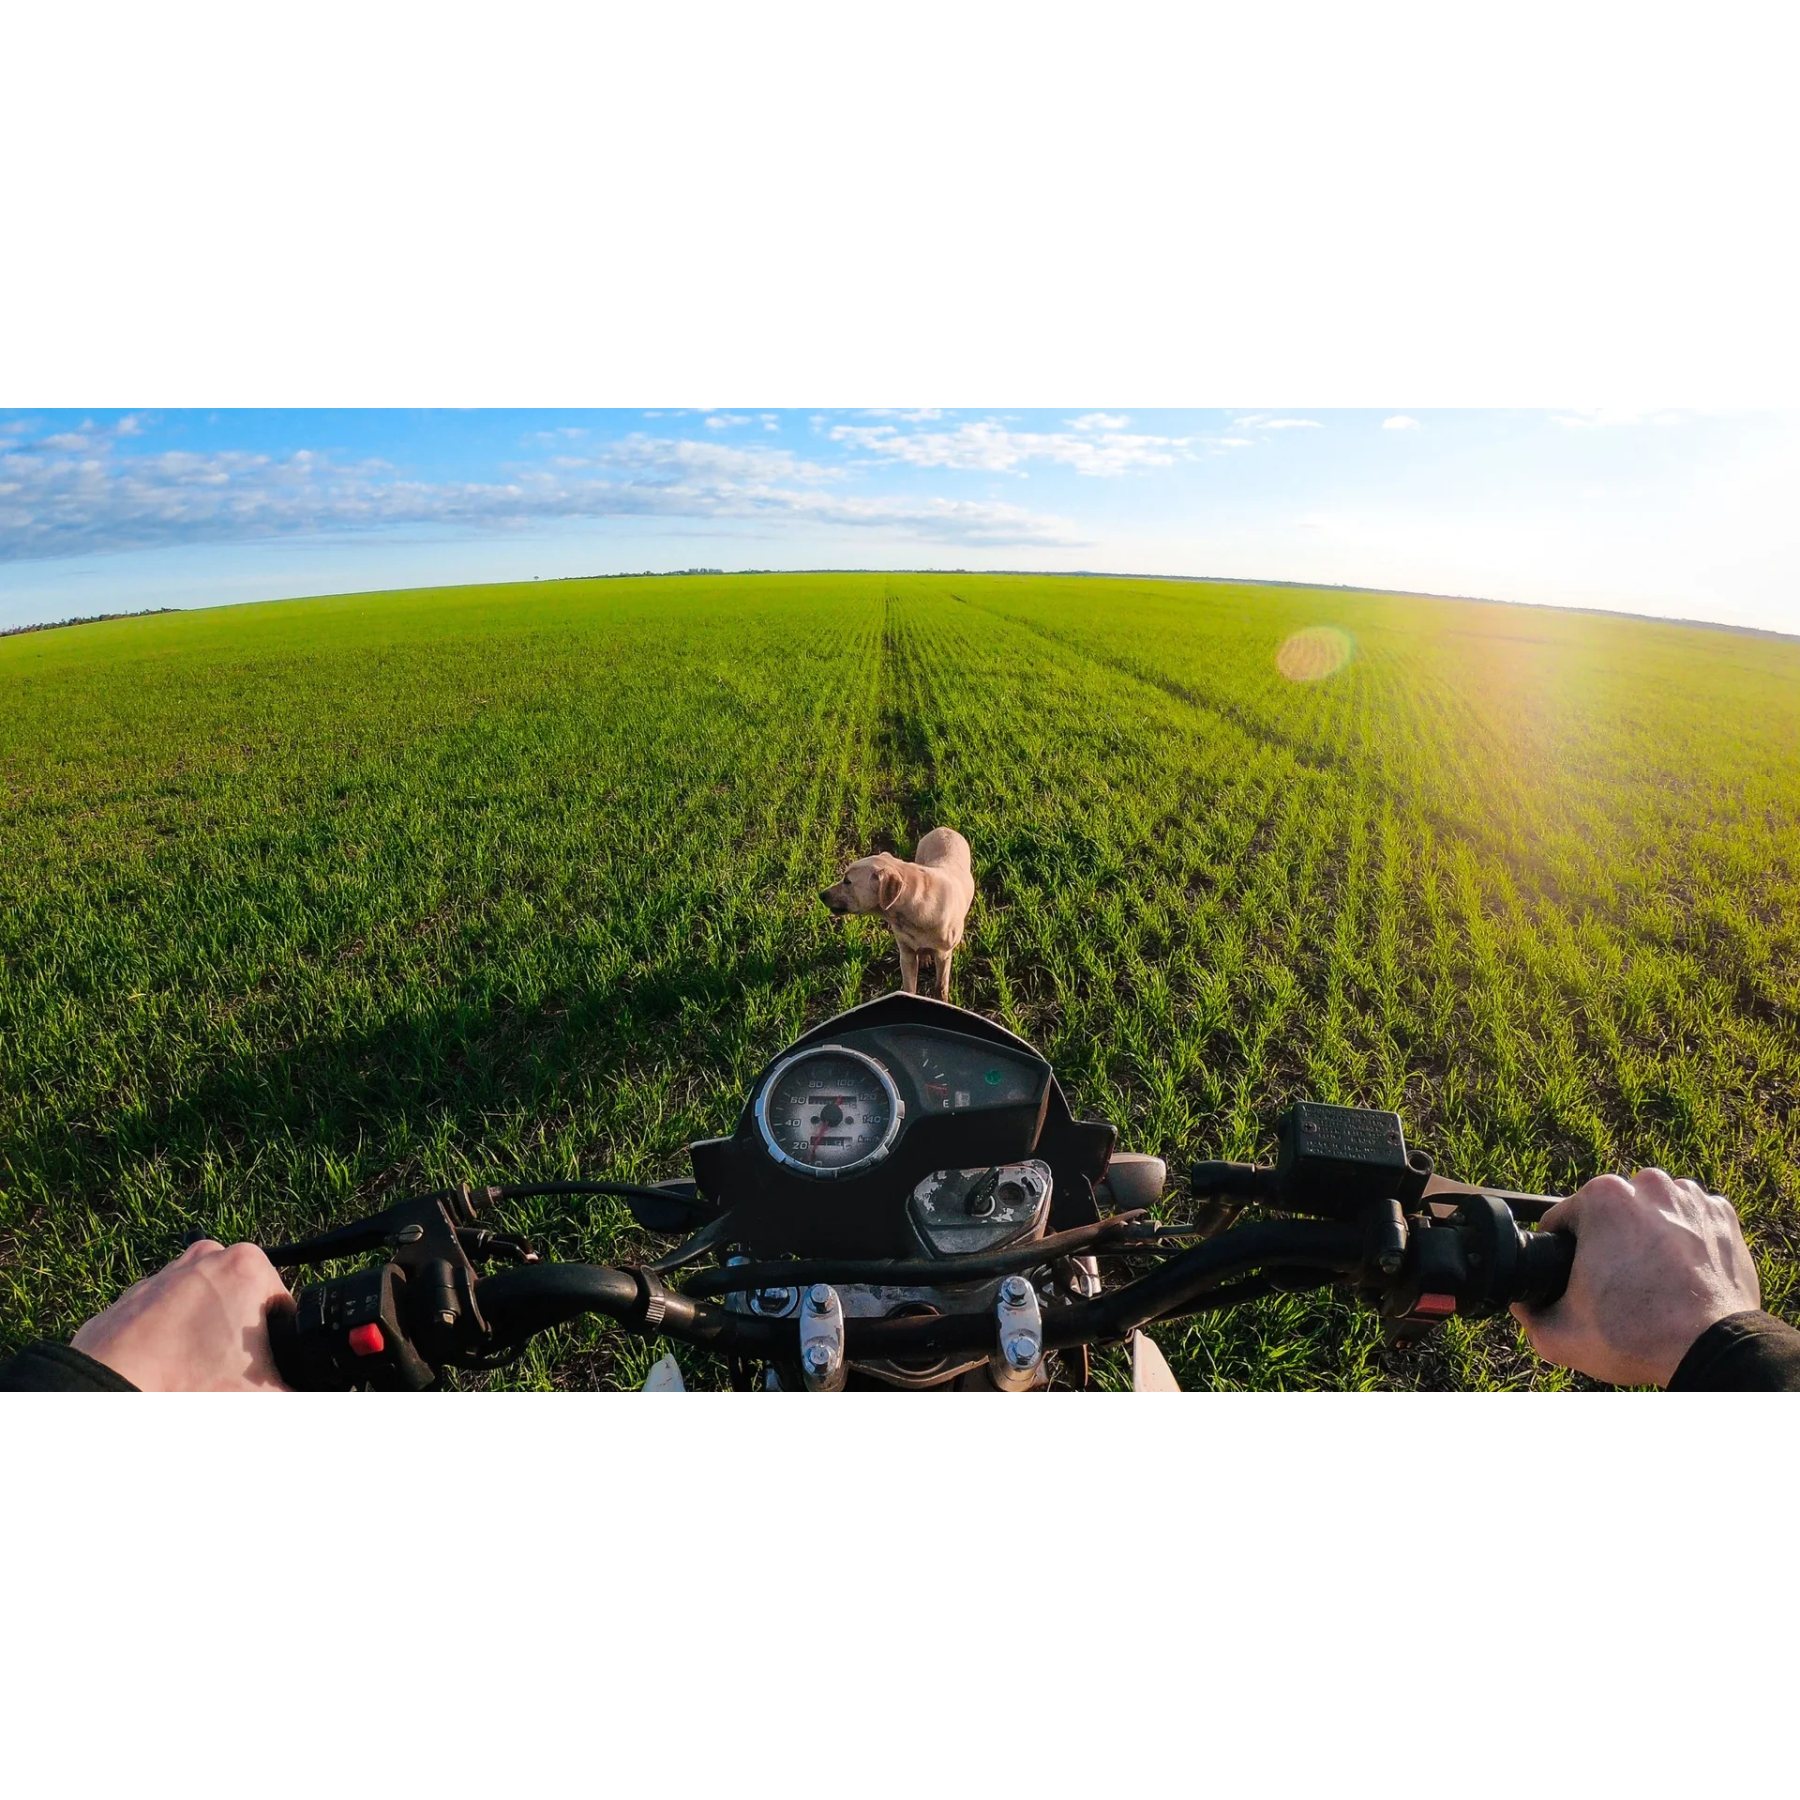 Harnais poitrine Chest Mount pour caméra GoPro - Conrad Electronic France